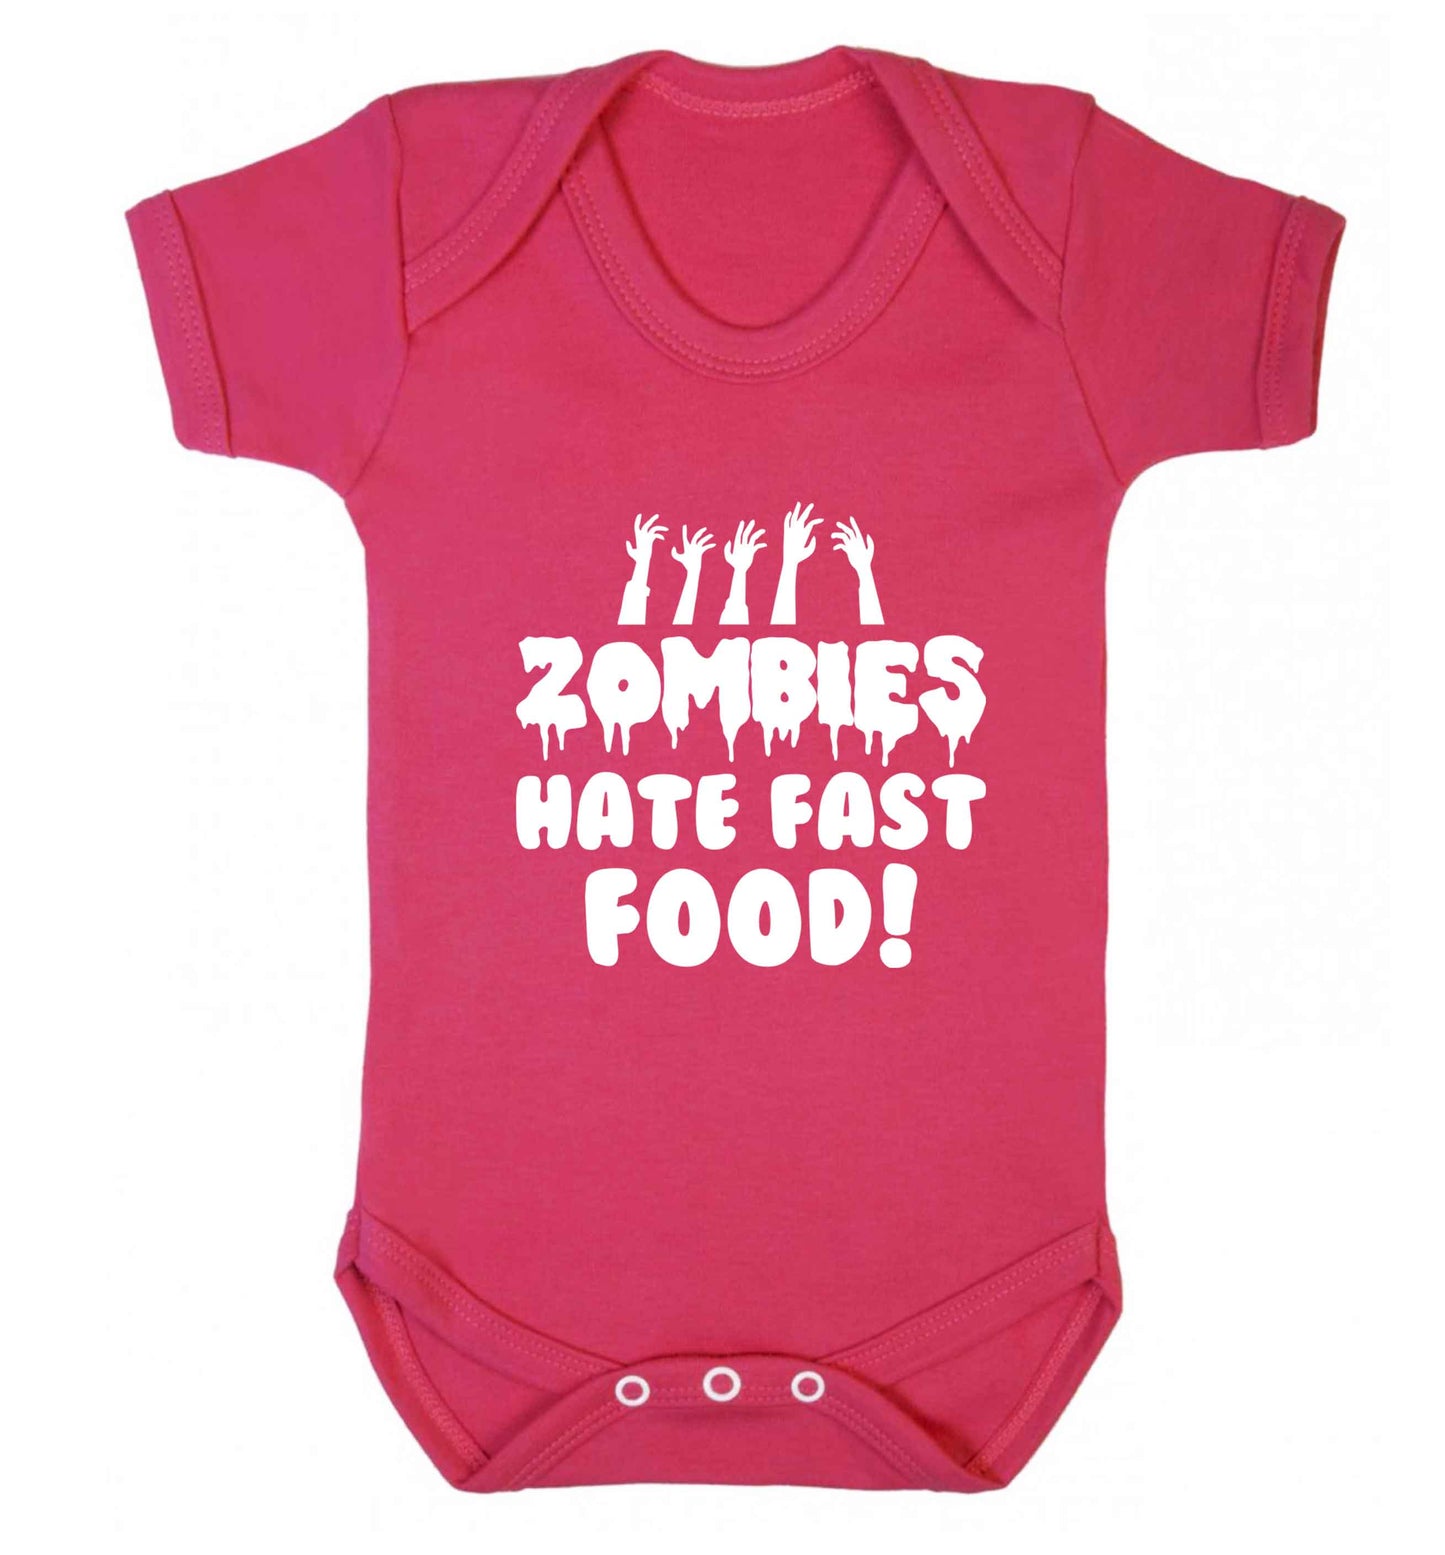 Zombies hate fast food baby vest dark pink 18-24 months